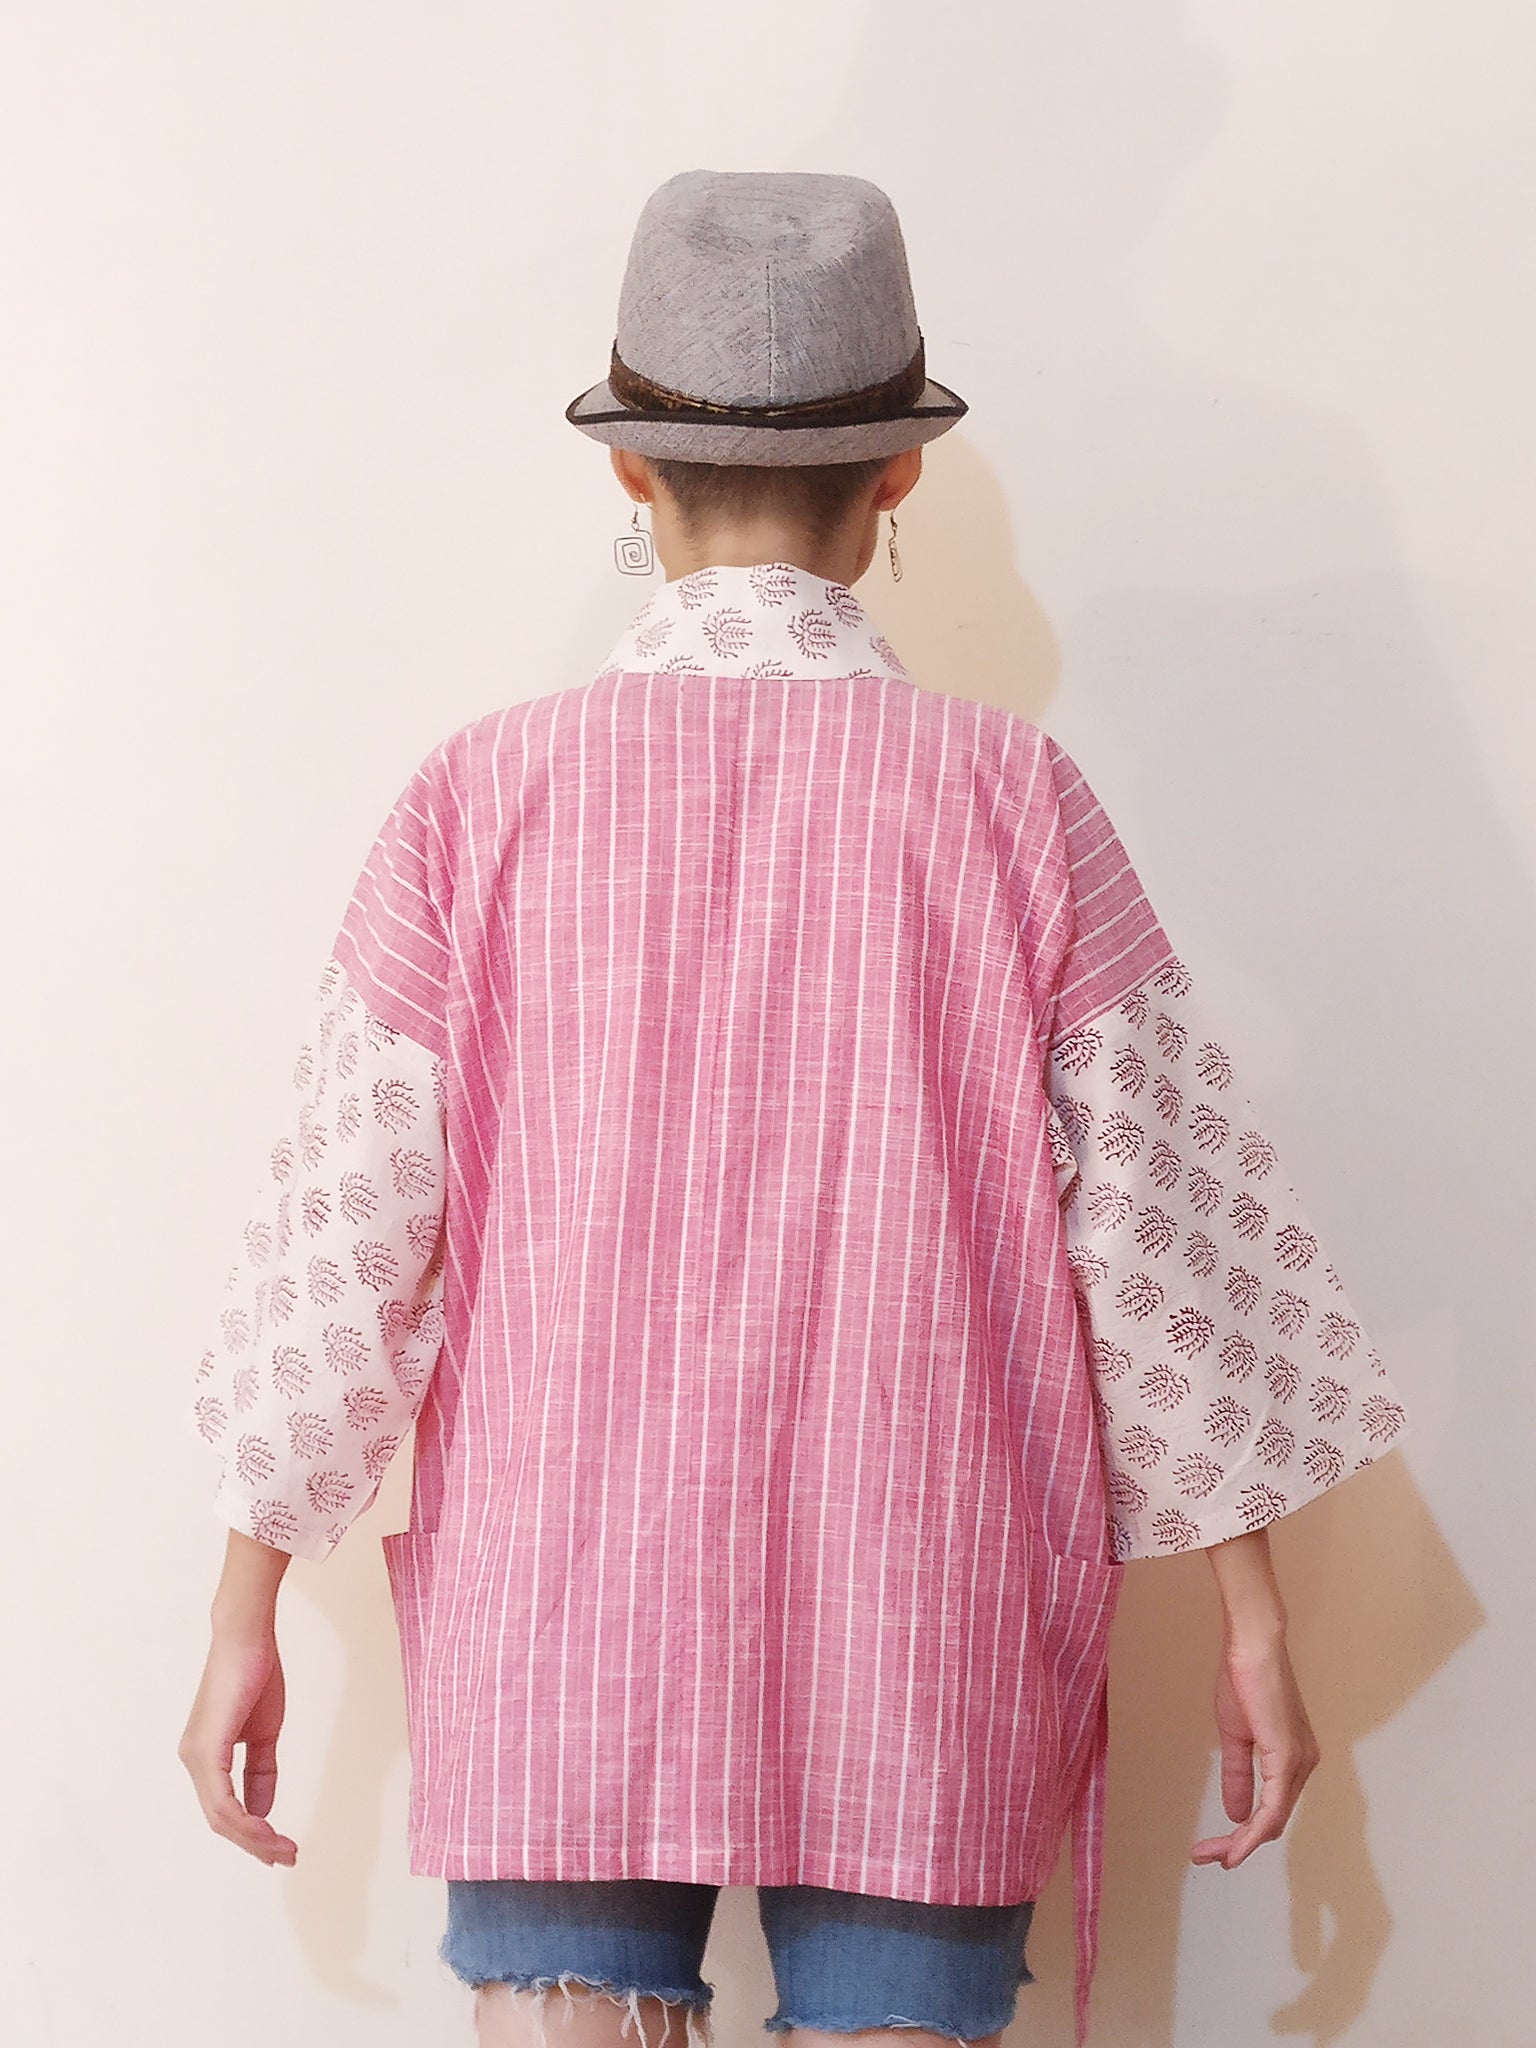 Kimono (Jinbei) Jacket - Handloom Stripe & Mul Mul Plant Sleeves (Red)